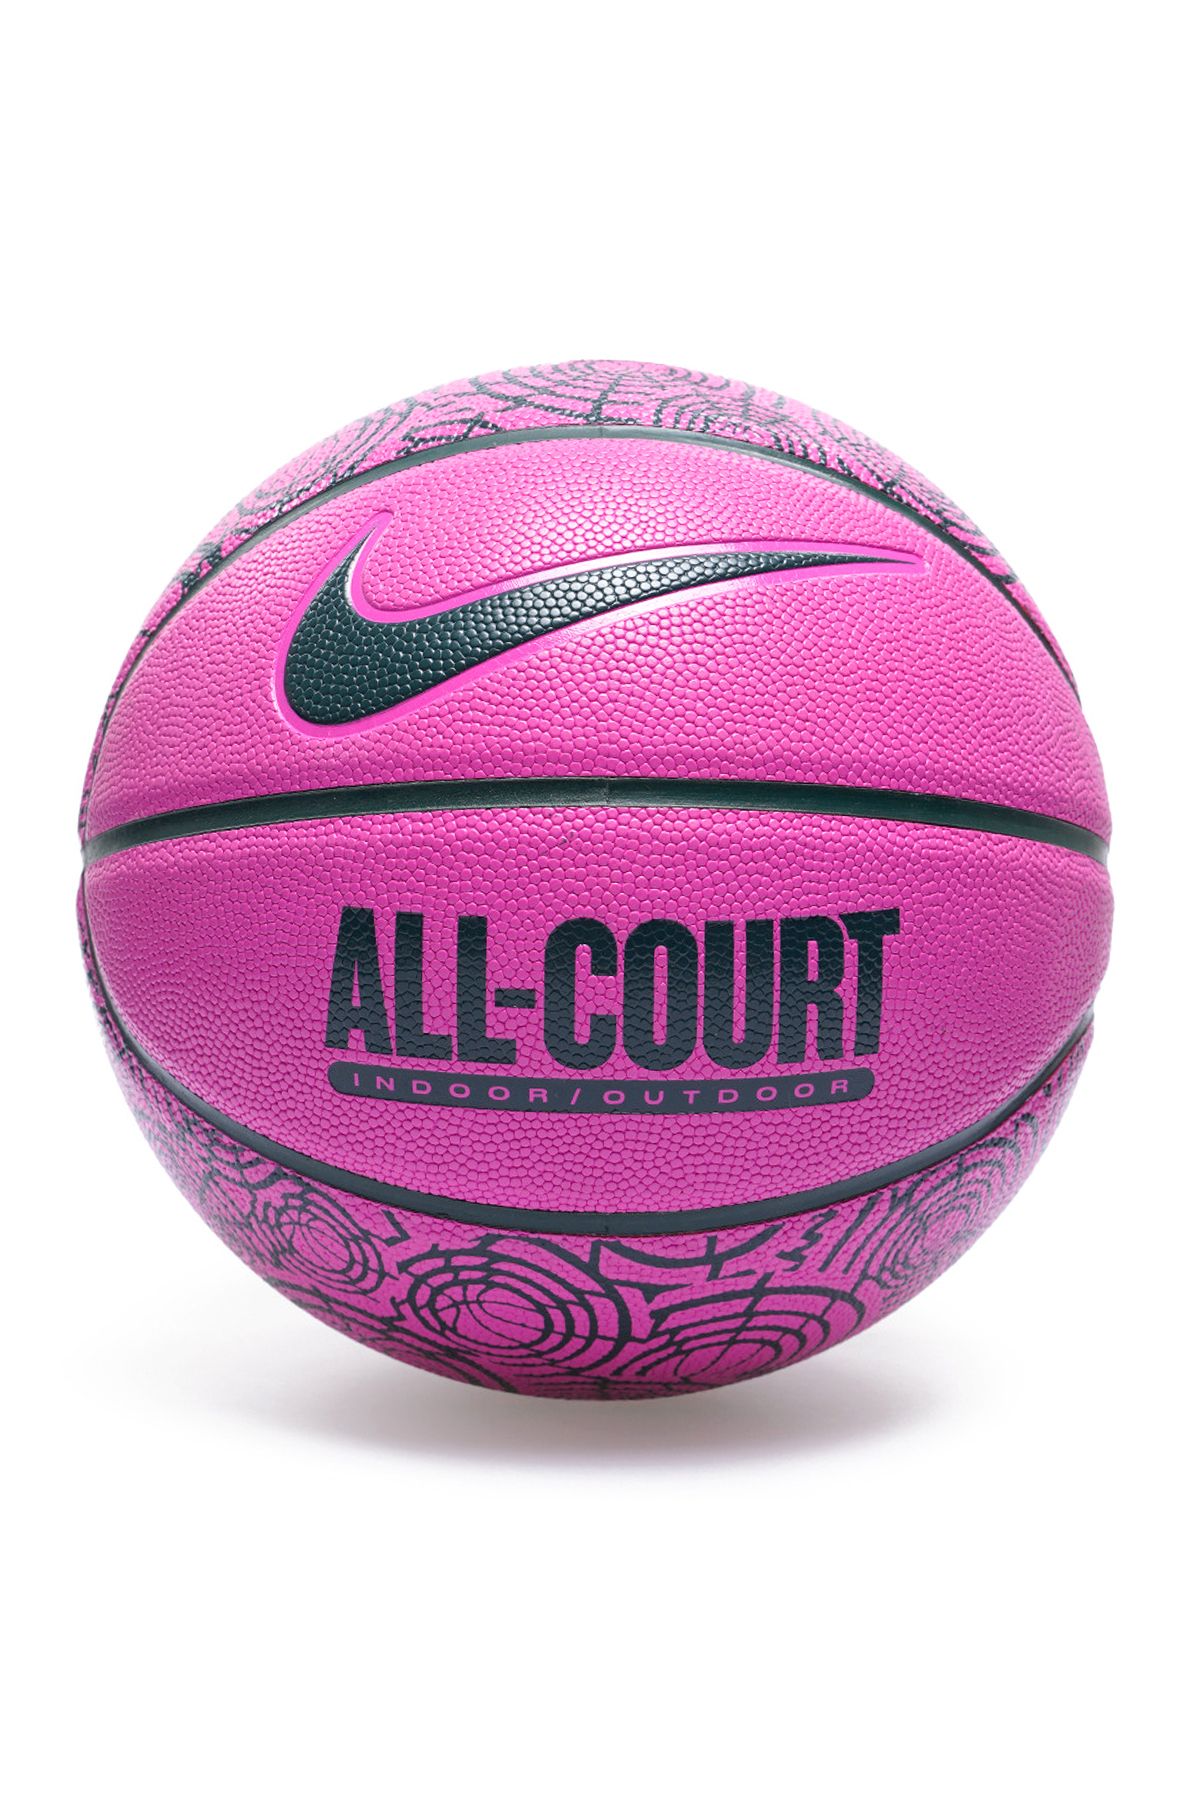 Nike Everyday all Court 8P Graphic Basketball GR 07 - Active Fuchsia Basketbol Topu